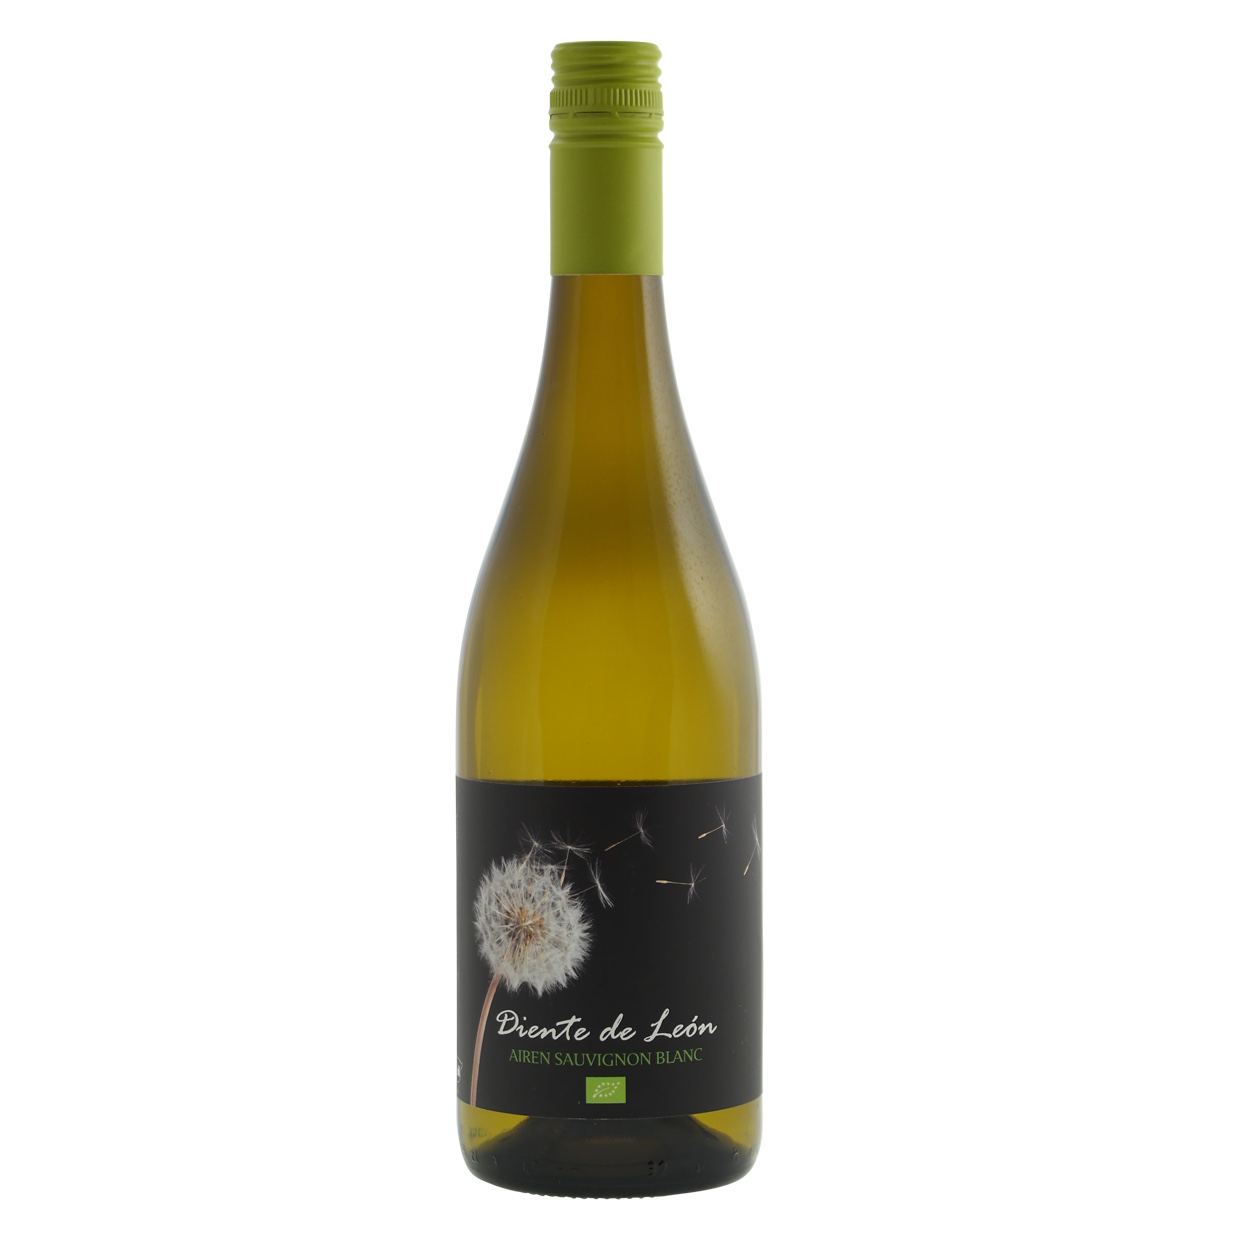 Diente-de-Leon-Airen-Sauvignon-Blanc-wijnvanons